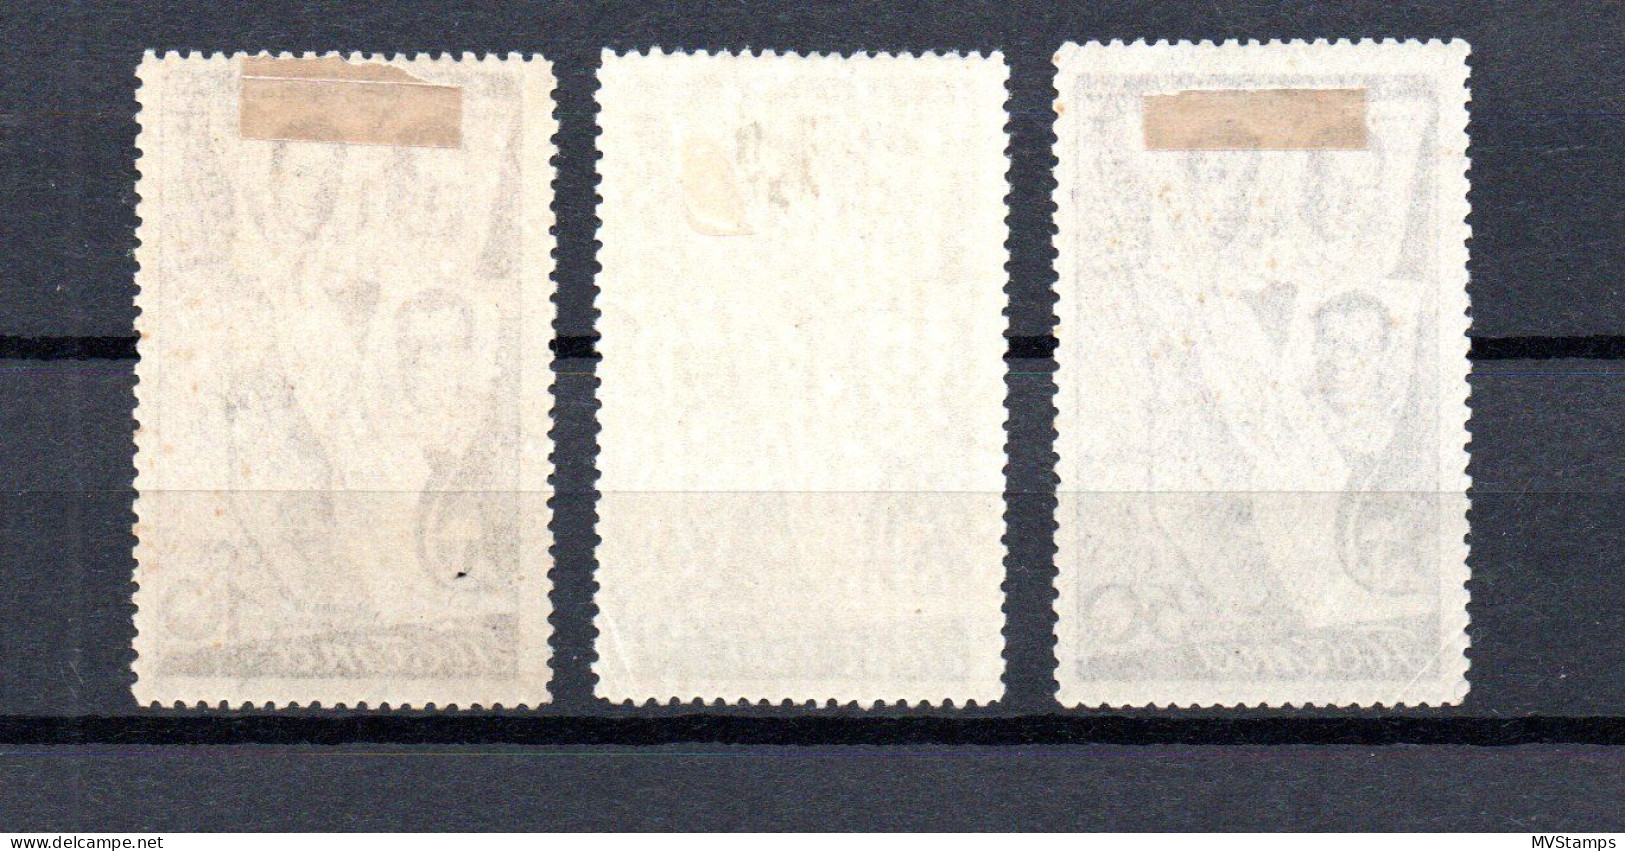 Russia 1938 Old Set Polar-Flight Moscow-San Jacinto Stamps (Michel 599/601) MLH - Ongebruikt